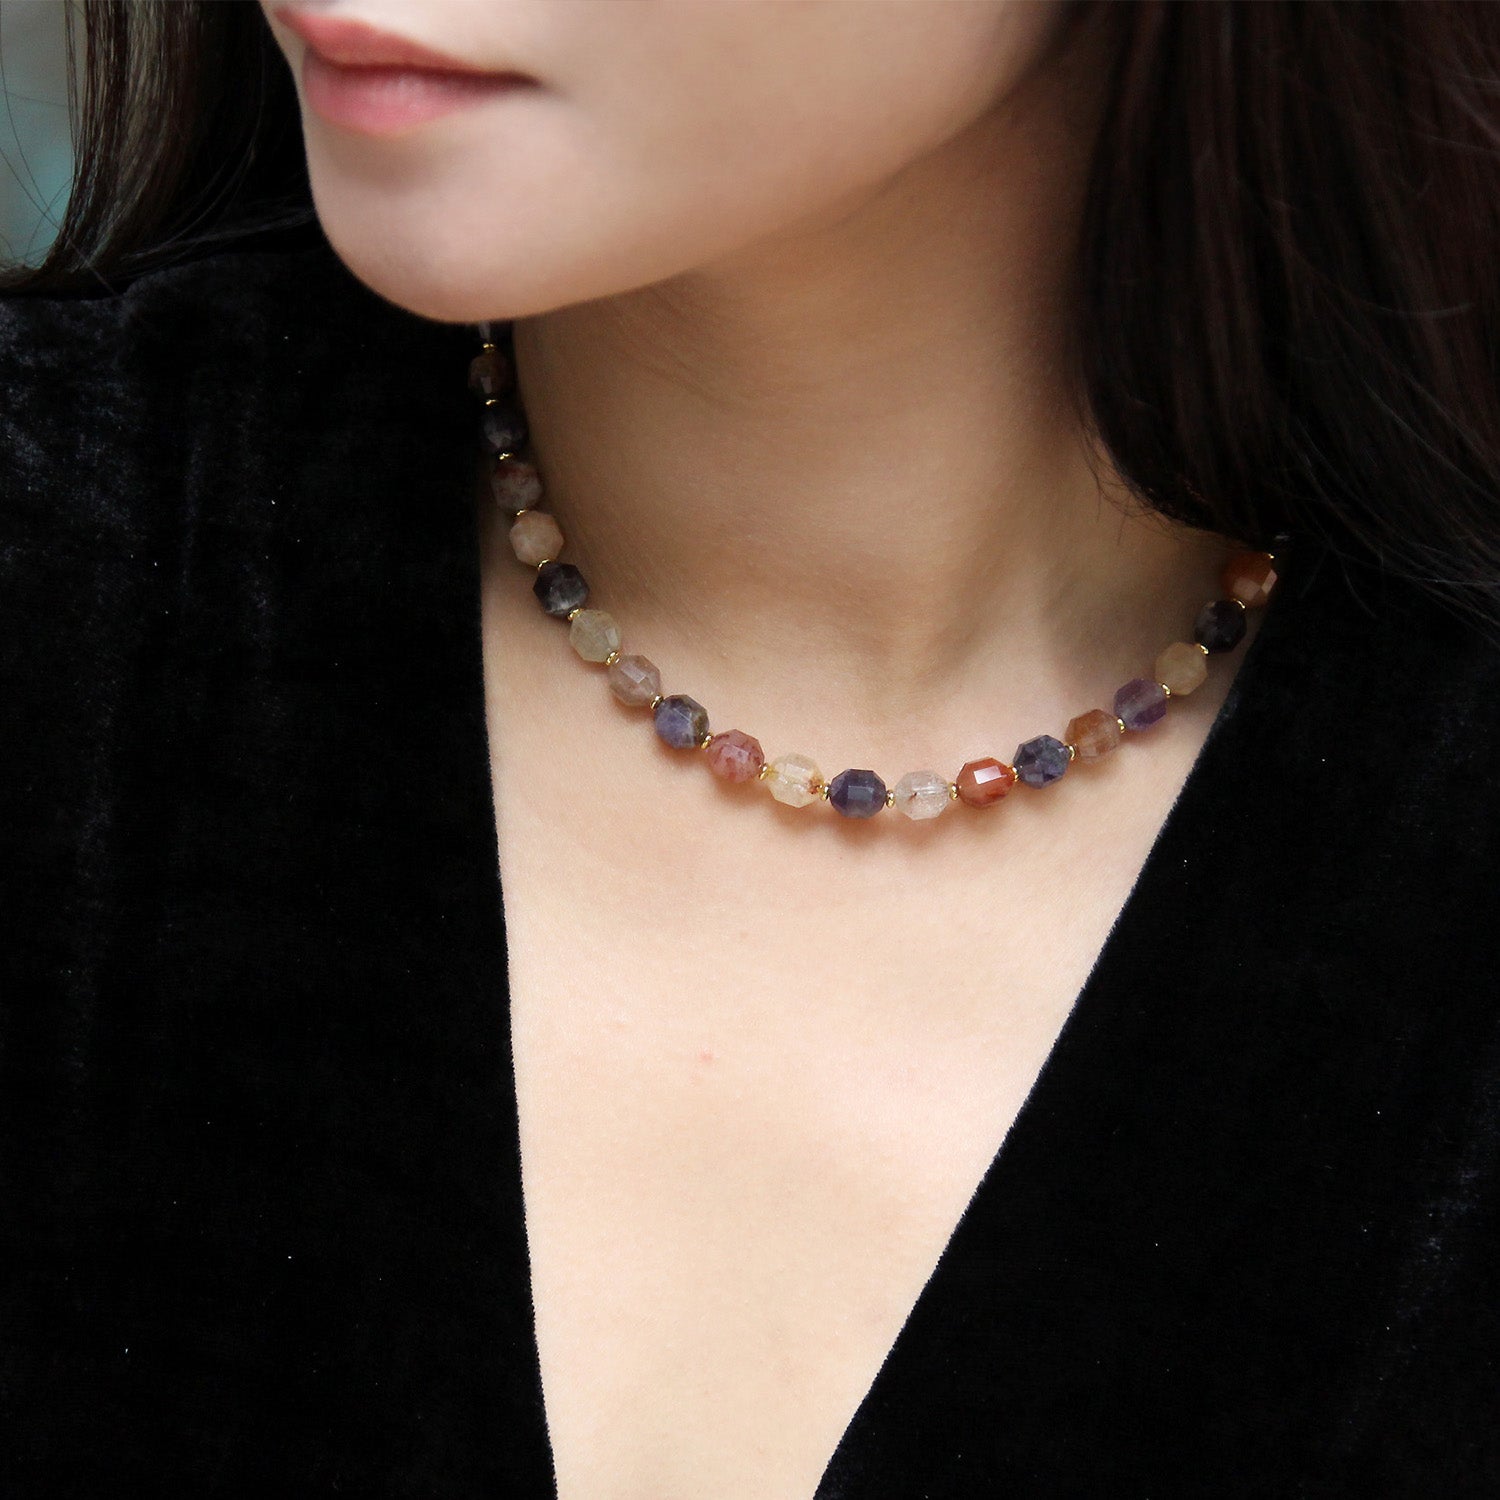 Trendy Fall Necklace: Mix Stones by Gosia Orlowska